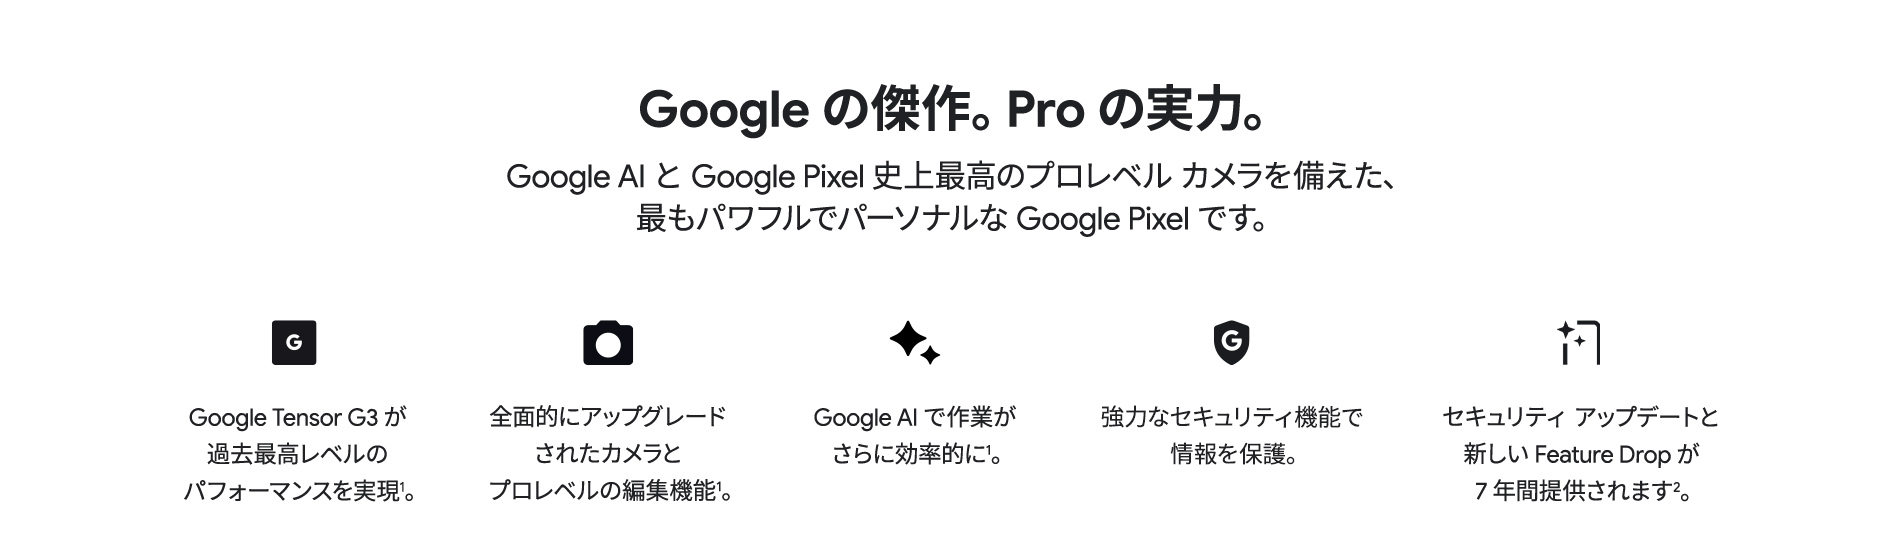 Google Pixel 8 Proの特徴